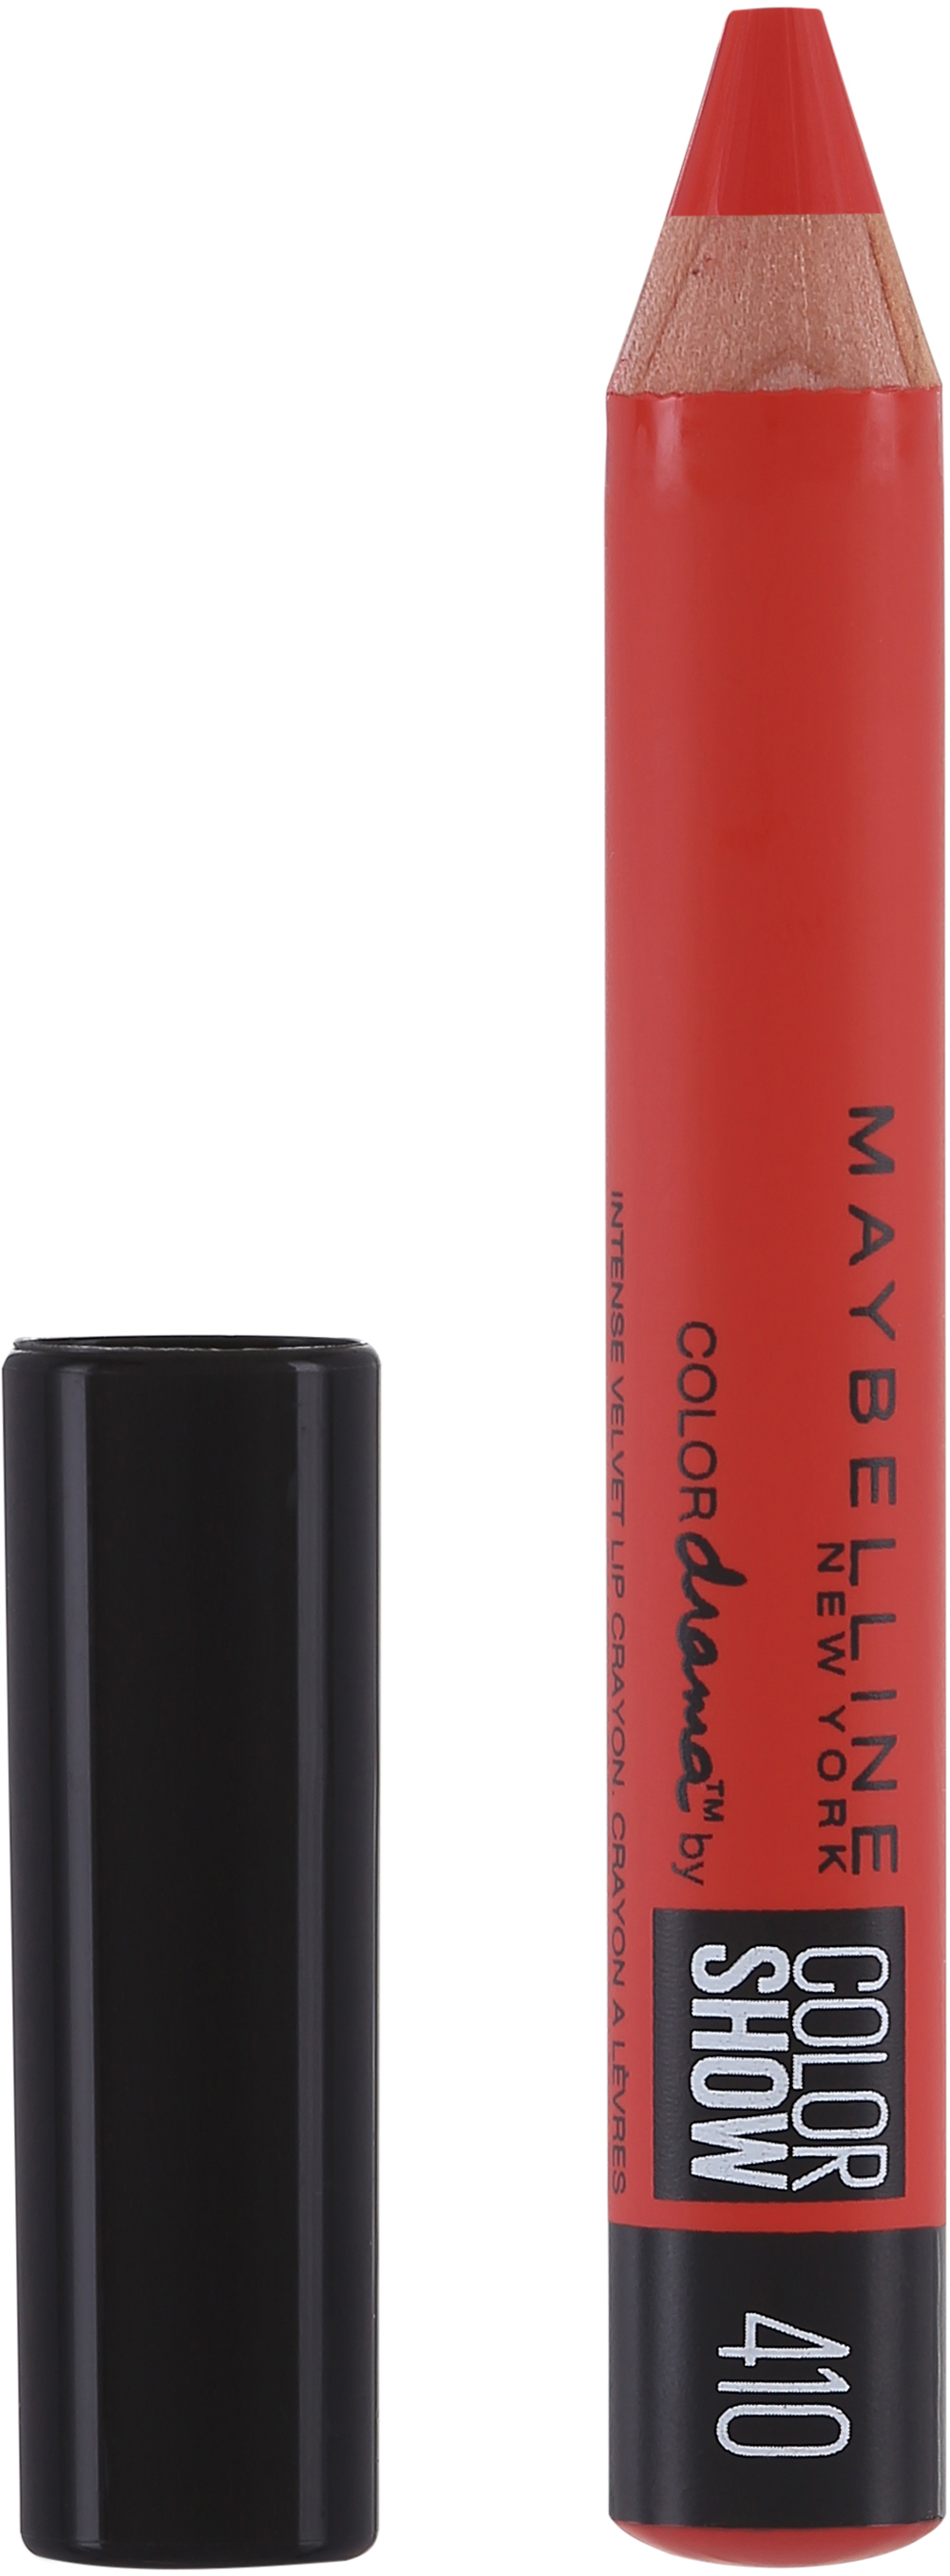 Maybelline Color Drama Lips 410 Fab Orange